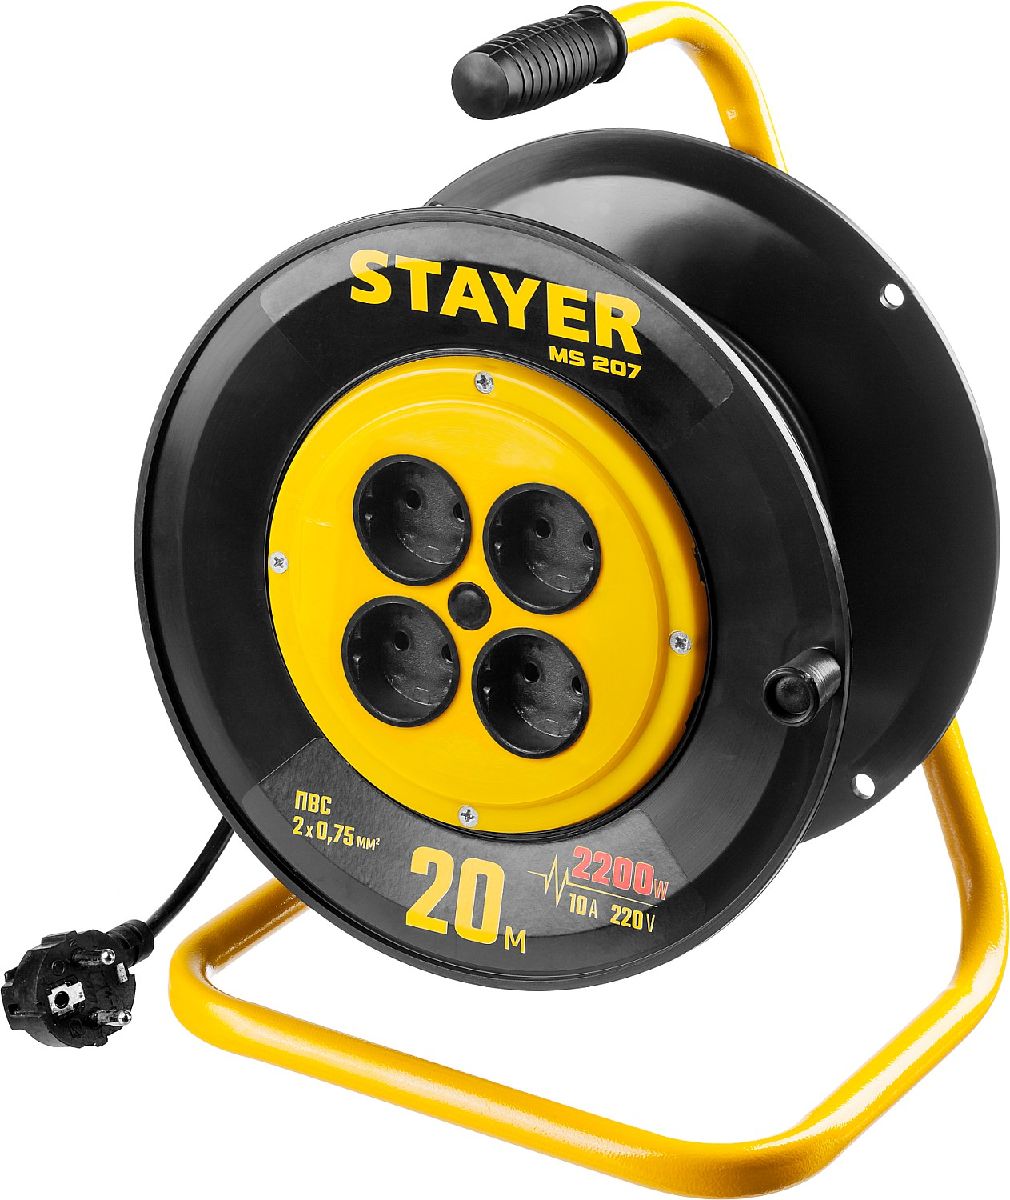 Удлинитель на катушке STAYER MS-207 20 м 2200Вт 4 гнезда ПВС 2х0.75 мм (55073-20_z01)